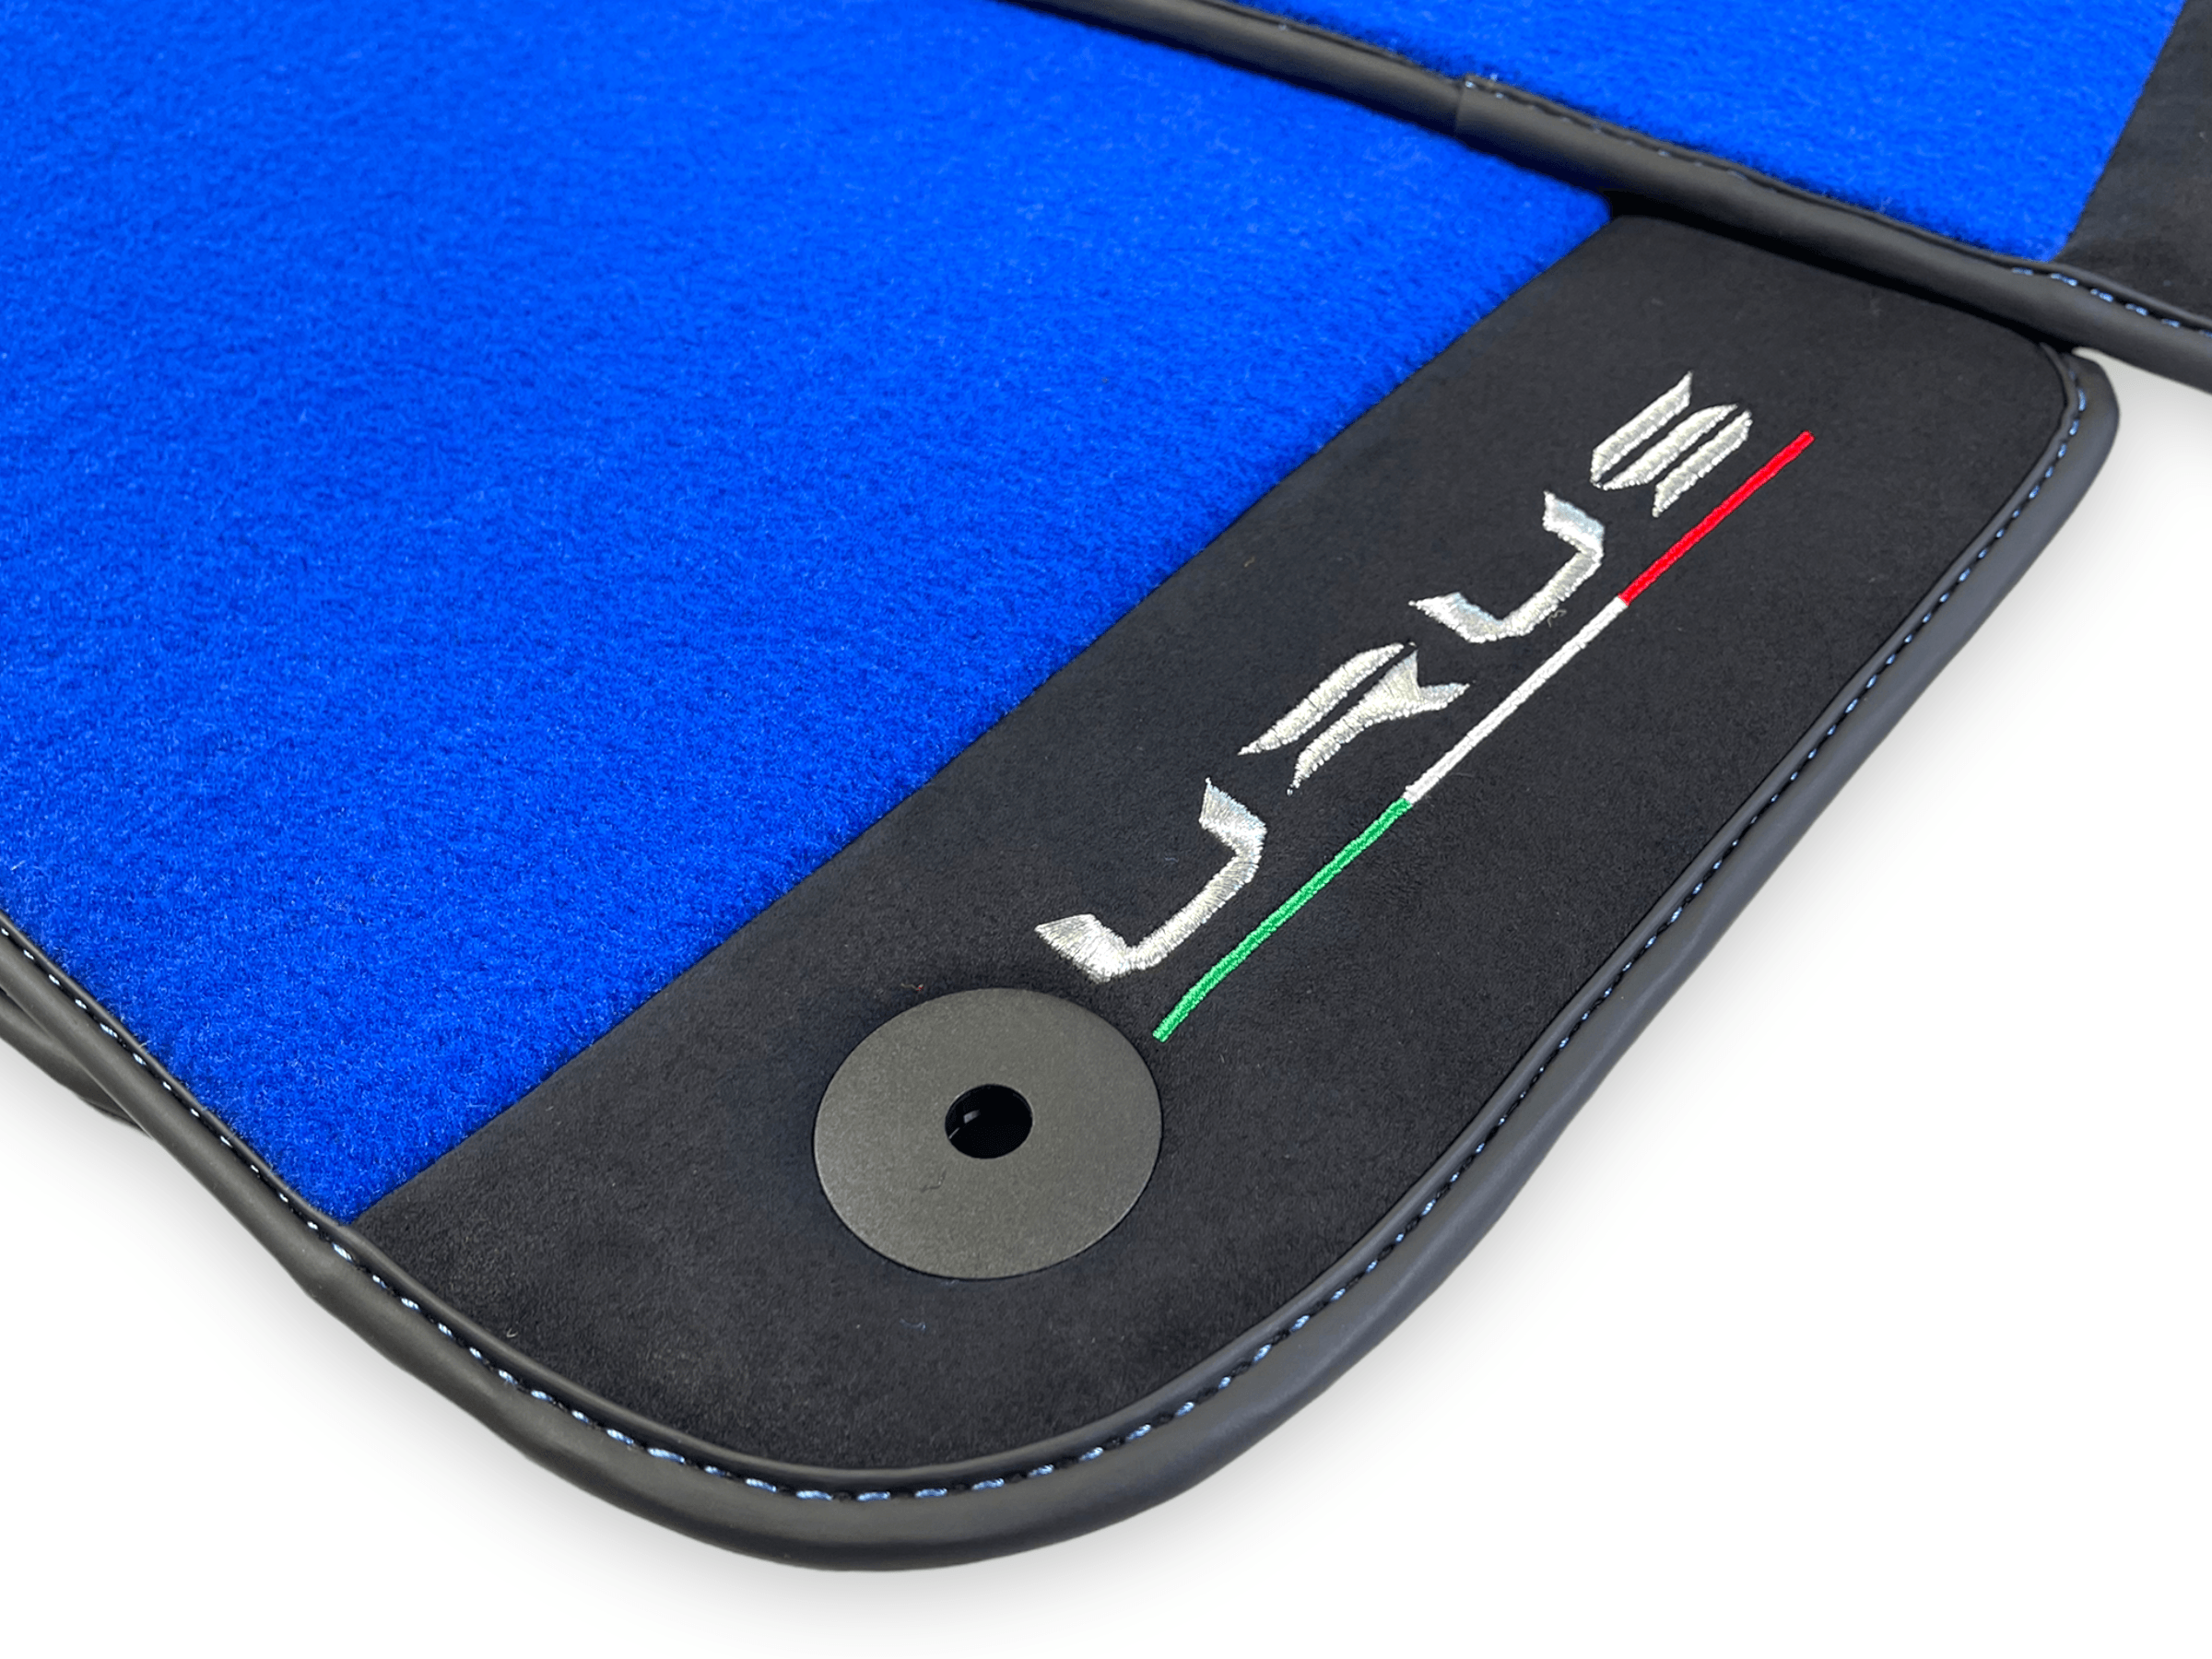 Blue Floor Mats For Lamborghini Urus With Alcantara Leather - AutoWin